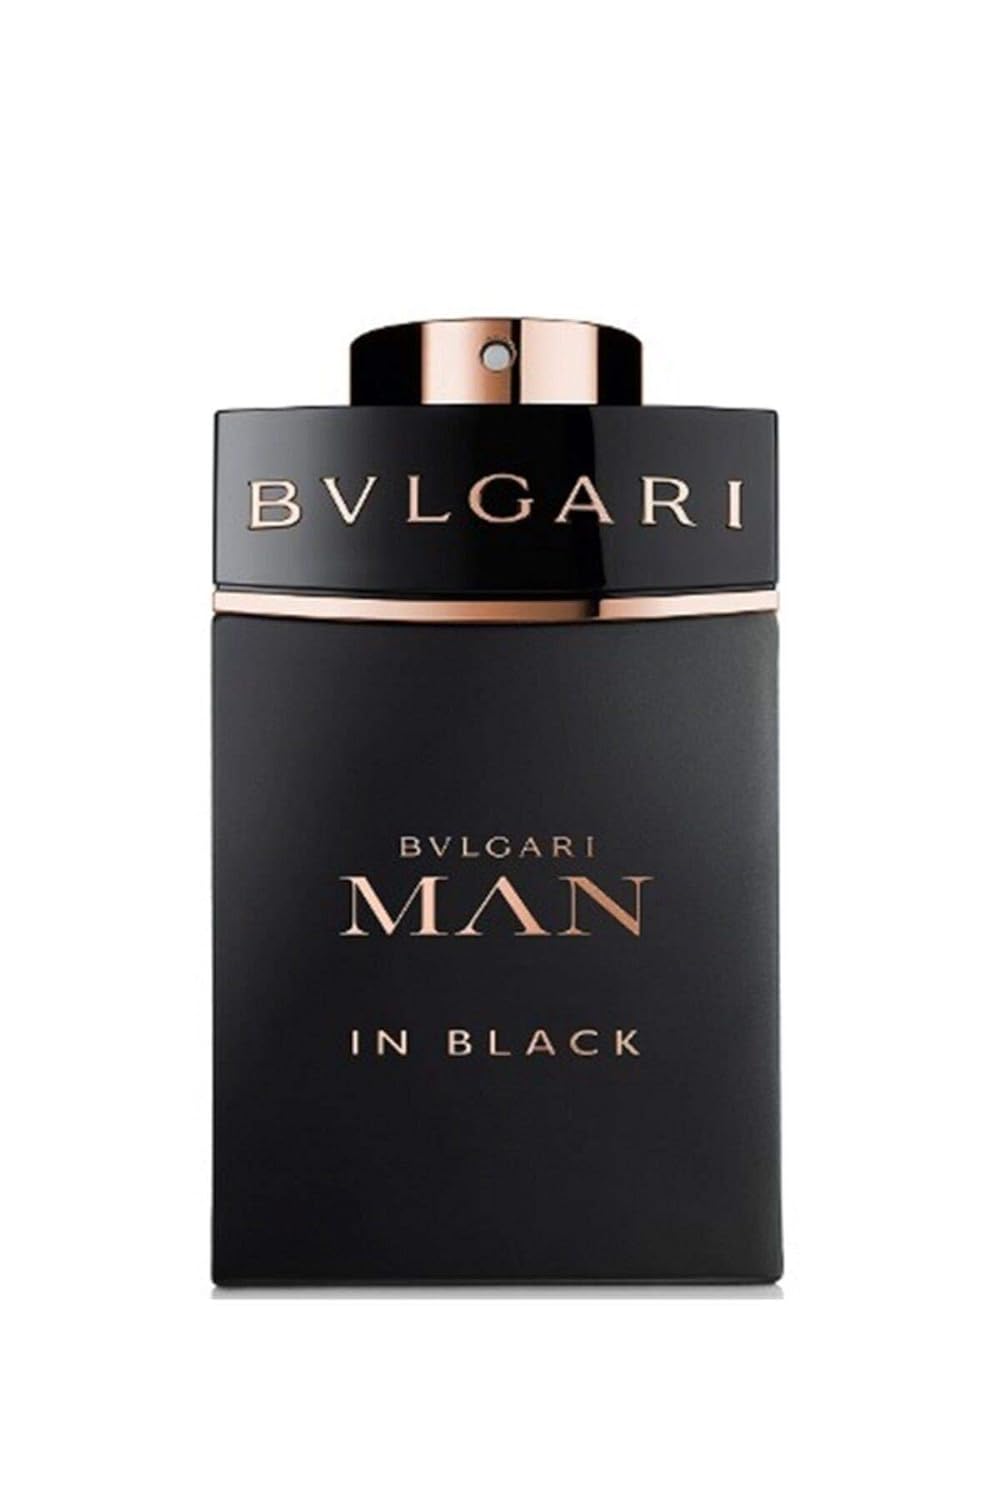 BVLGARI MAN IN BLACK ESSENCE 3.4oz EDP SP (M)